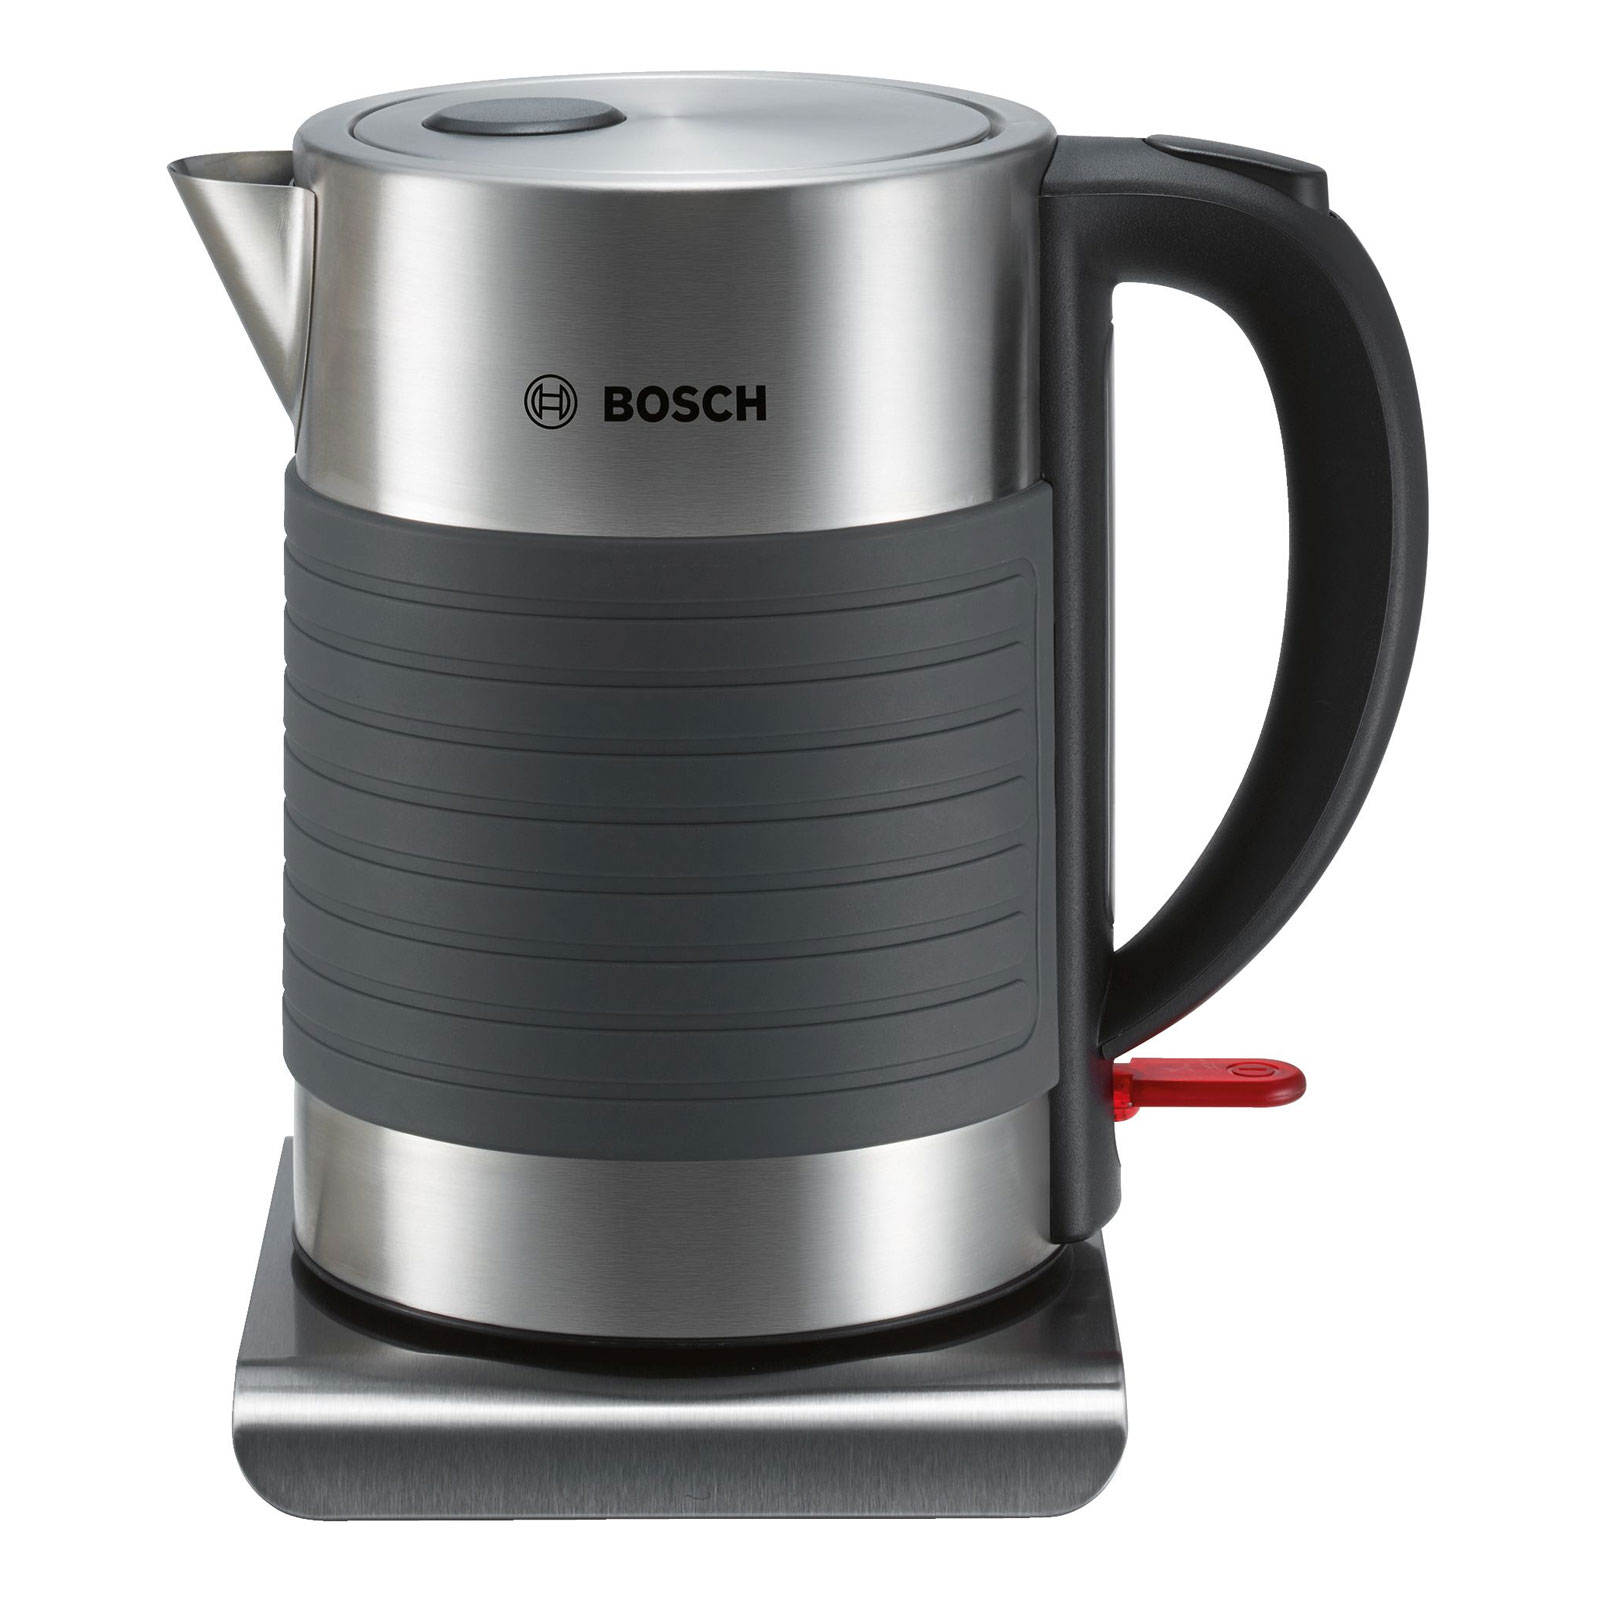 Bosch TWK7S05 Wasserkocher grau/schwarz